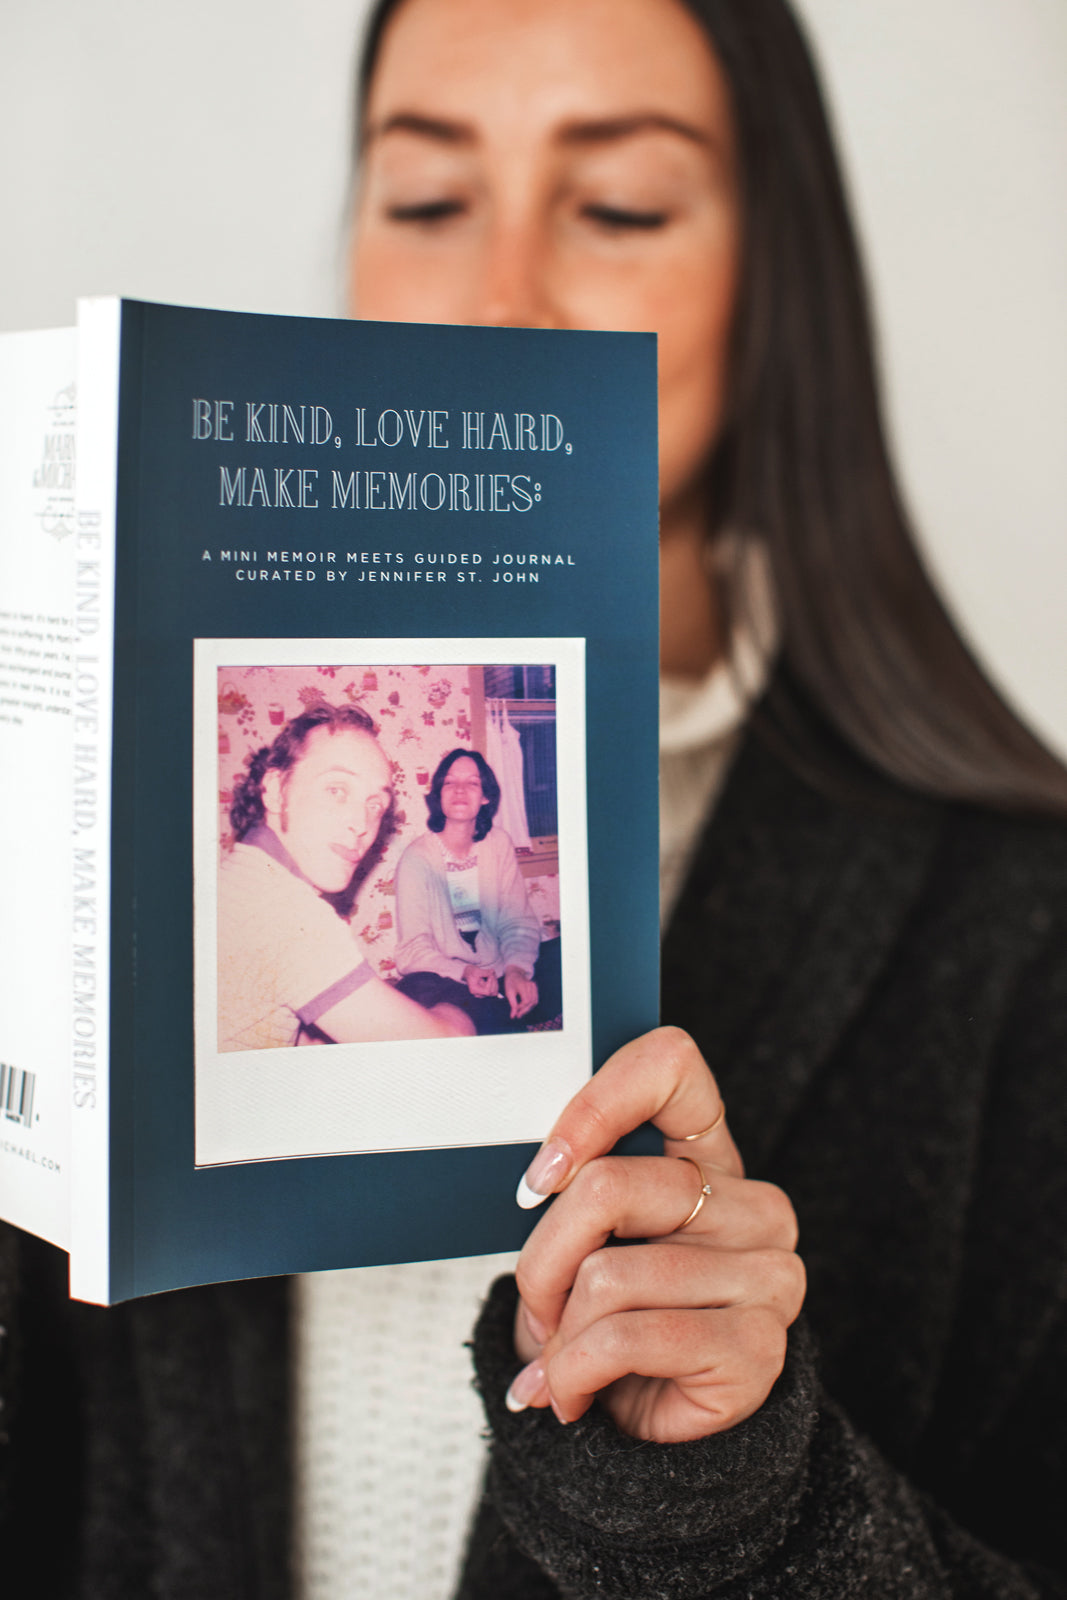 BE KIND, LOVE HARD, MAKE MEMORIES:  A Mini Memoir meets Guided Journal